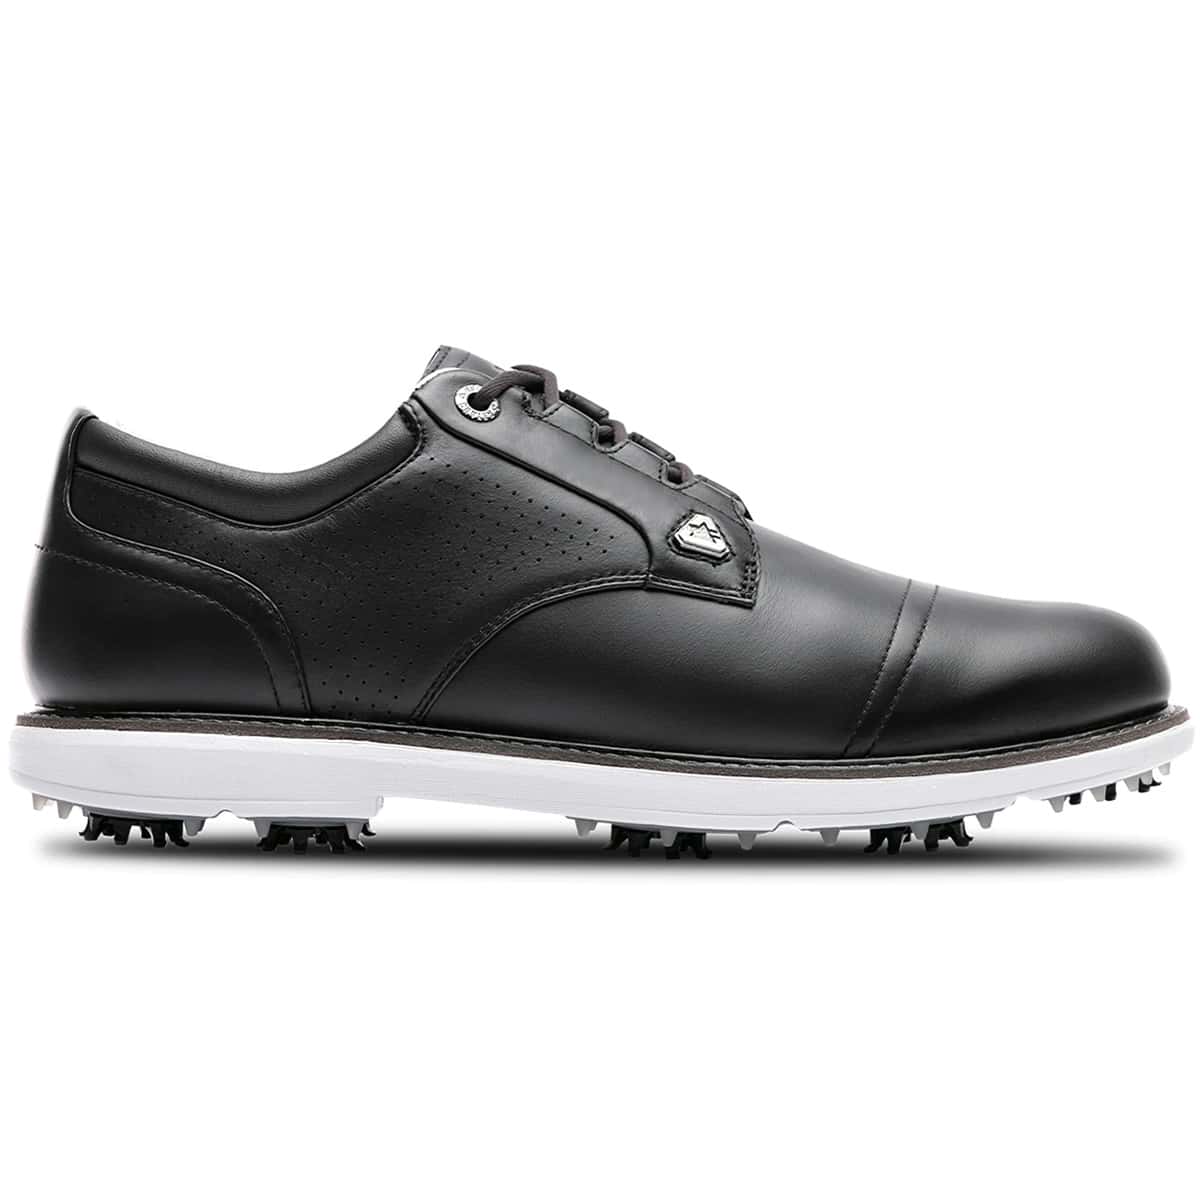 Waterproof Golf Shoes | The Best Waterproof Golf Shoes 2022